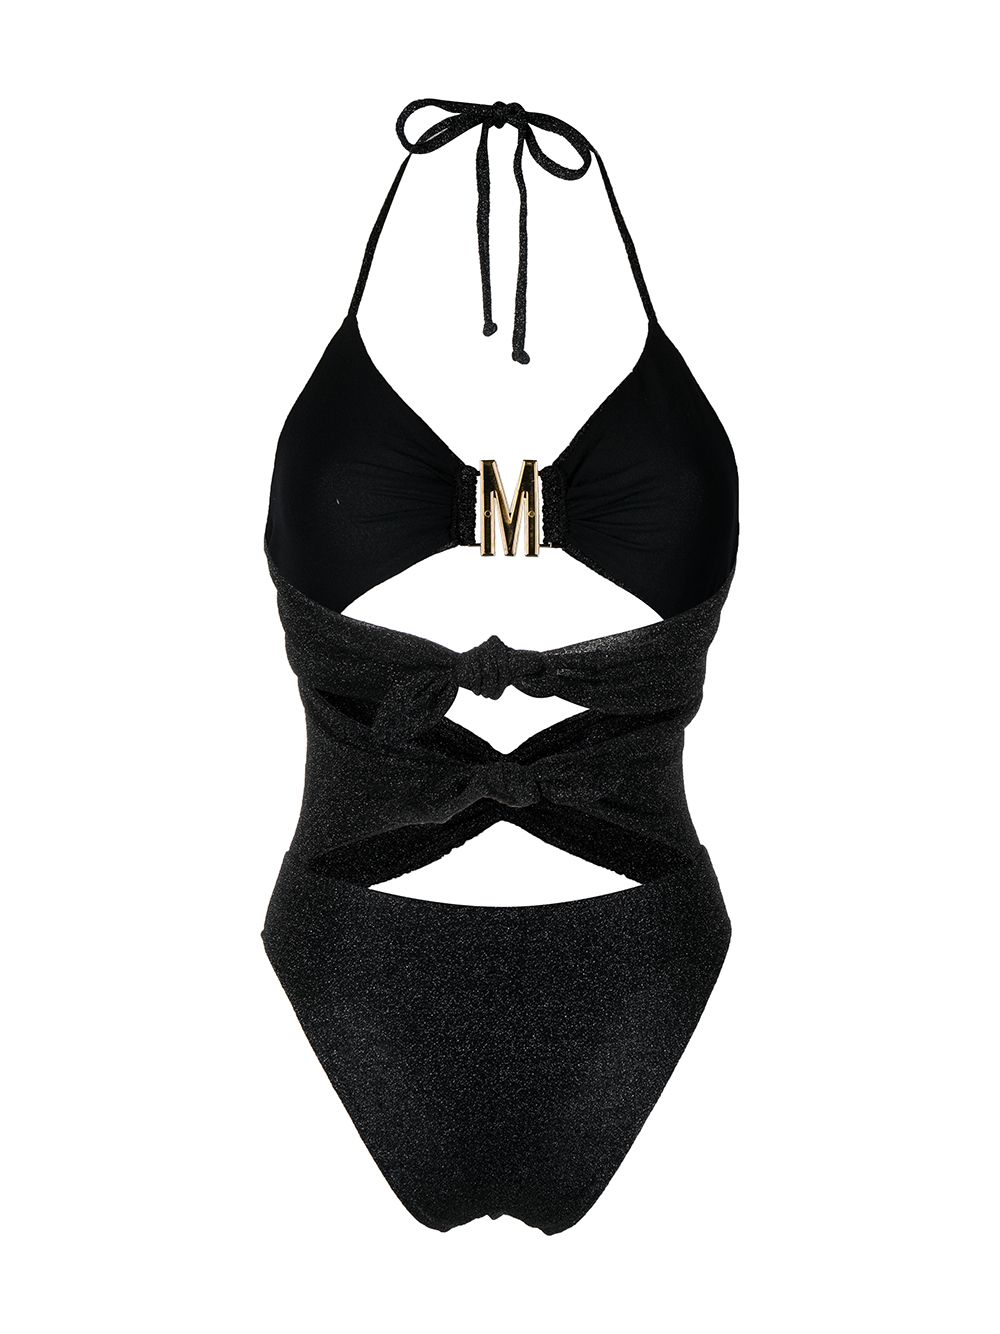 фото Moschino купальник с вырезами и логотипом